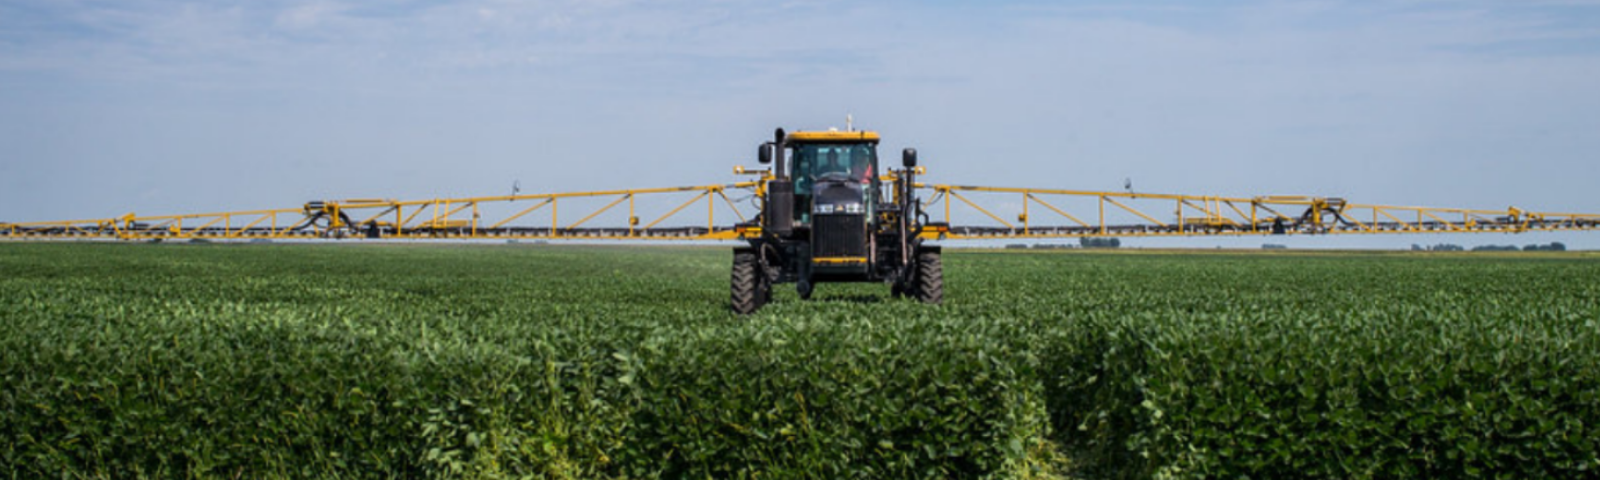 Crop sprayer moves across a field, Illinois